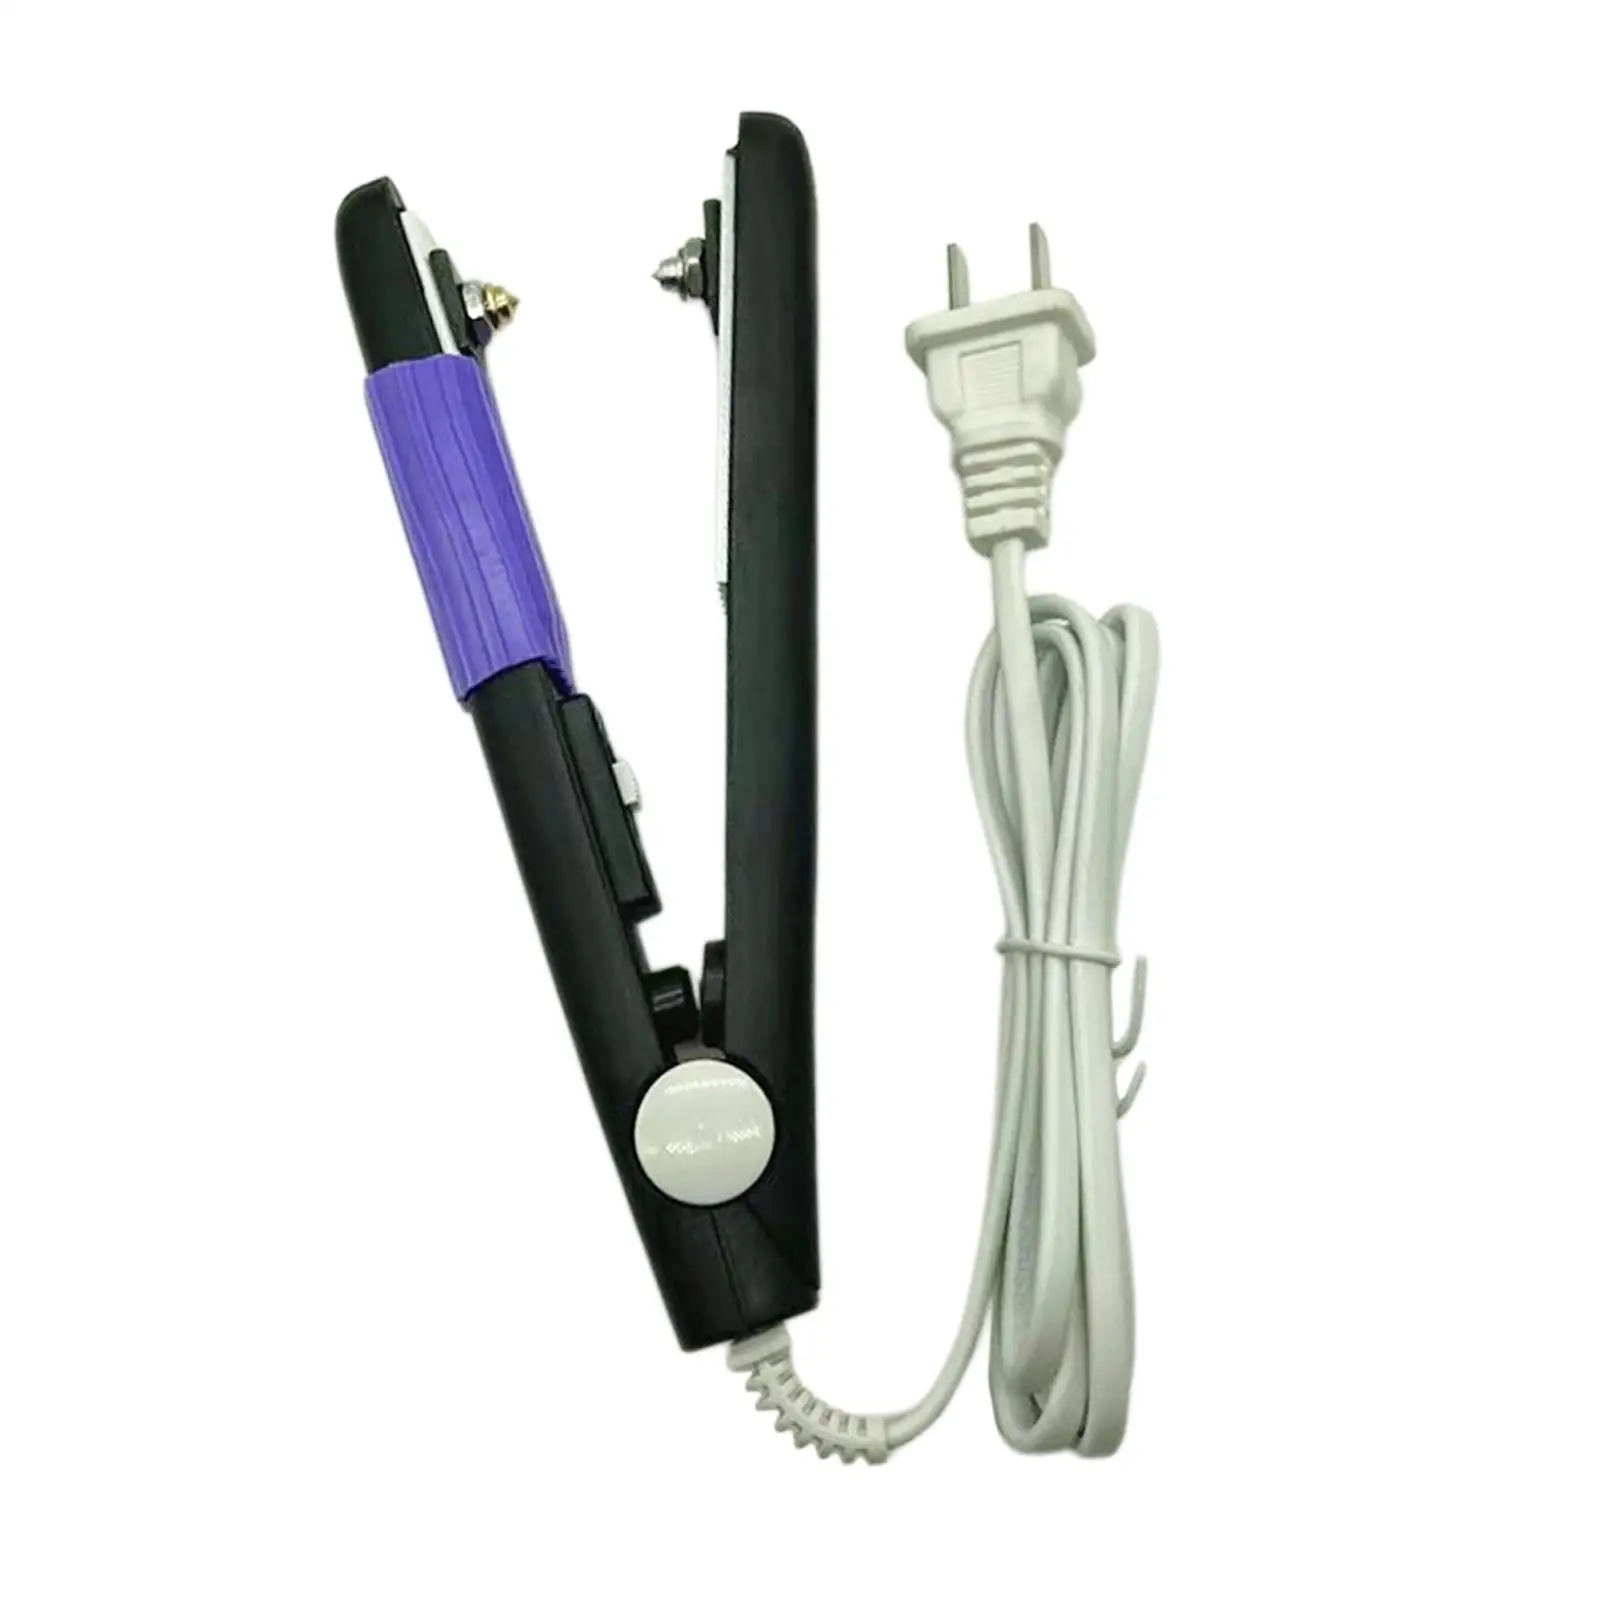 Handheld Heat Press Badminton Racket Pliers Tennis Restring Equipment, Clamping Tool Tennis Racquet Clamp Plier for Repairing